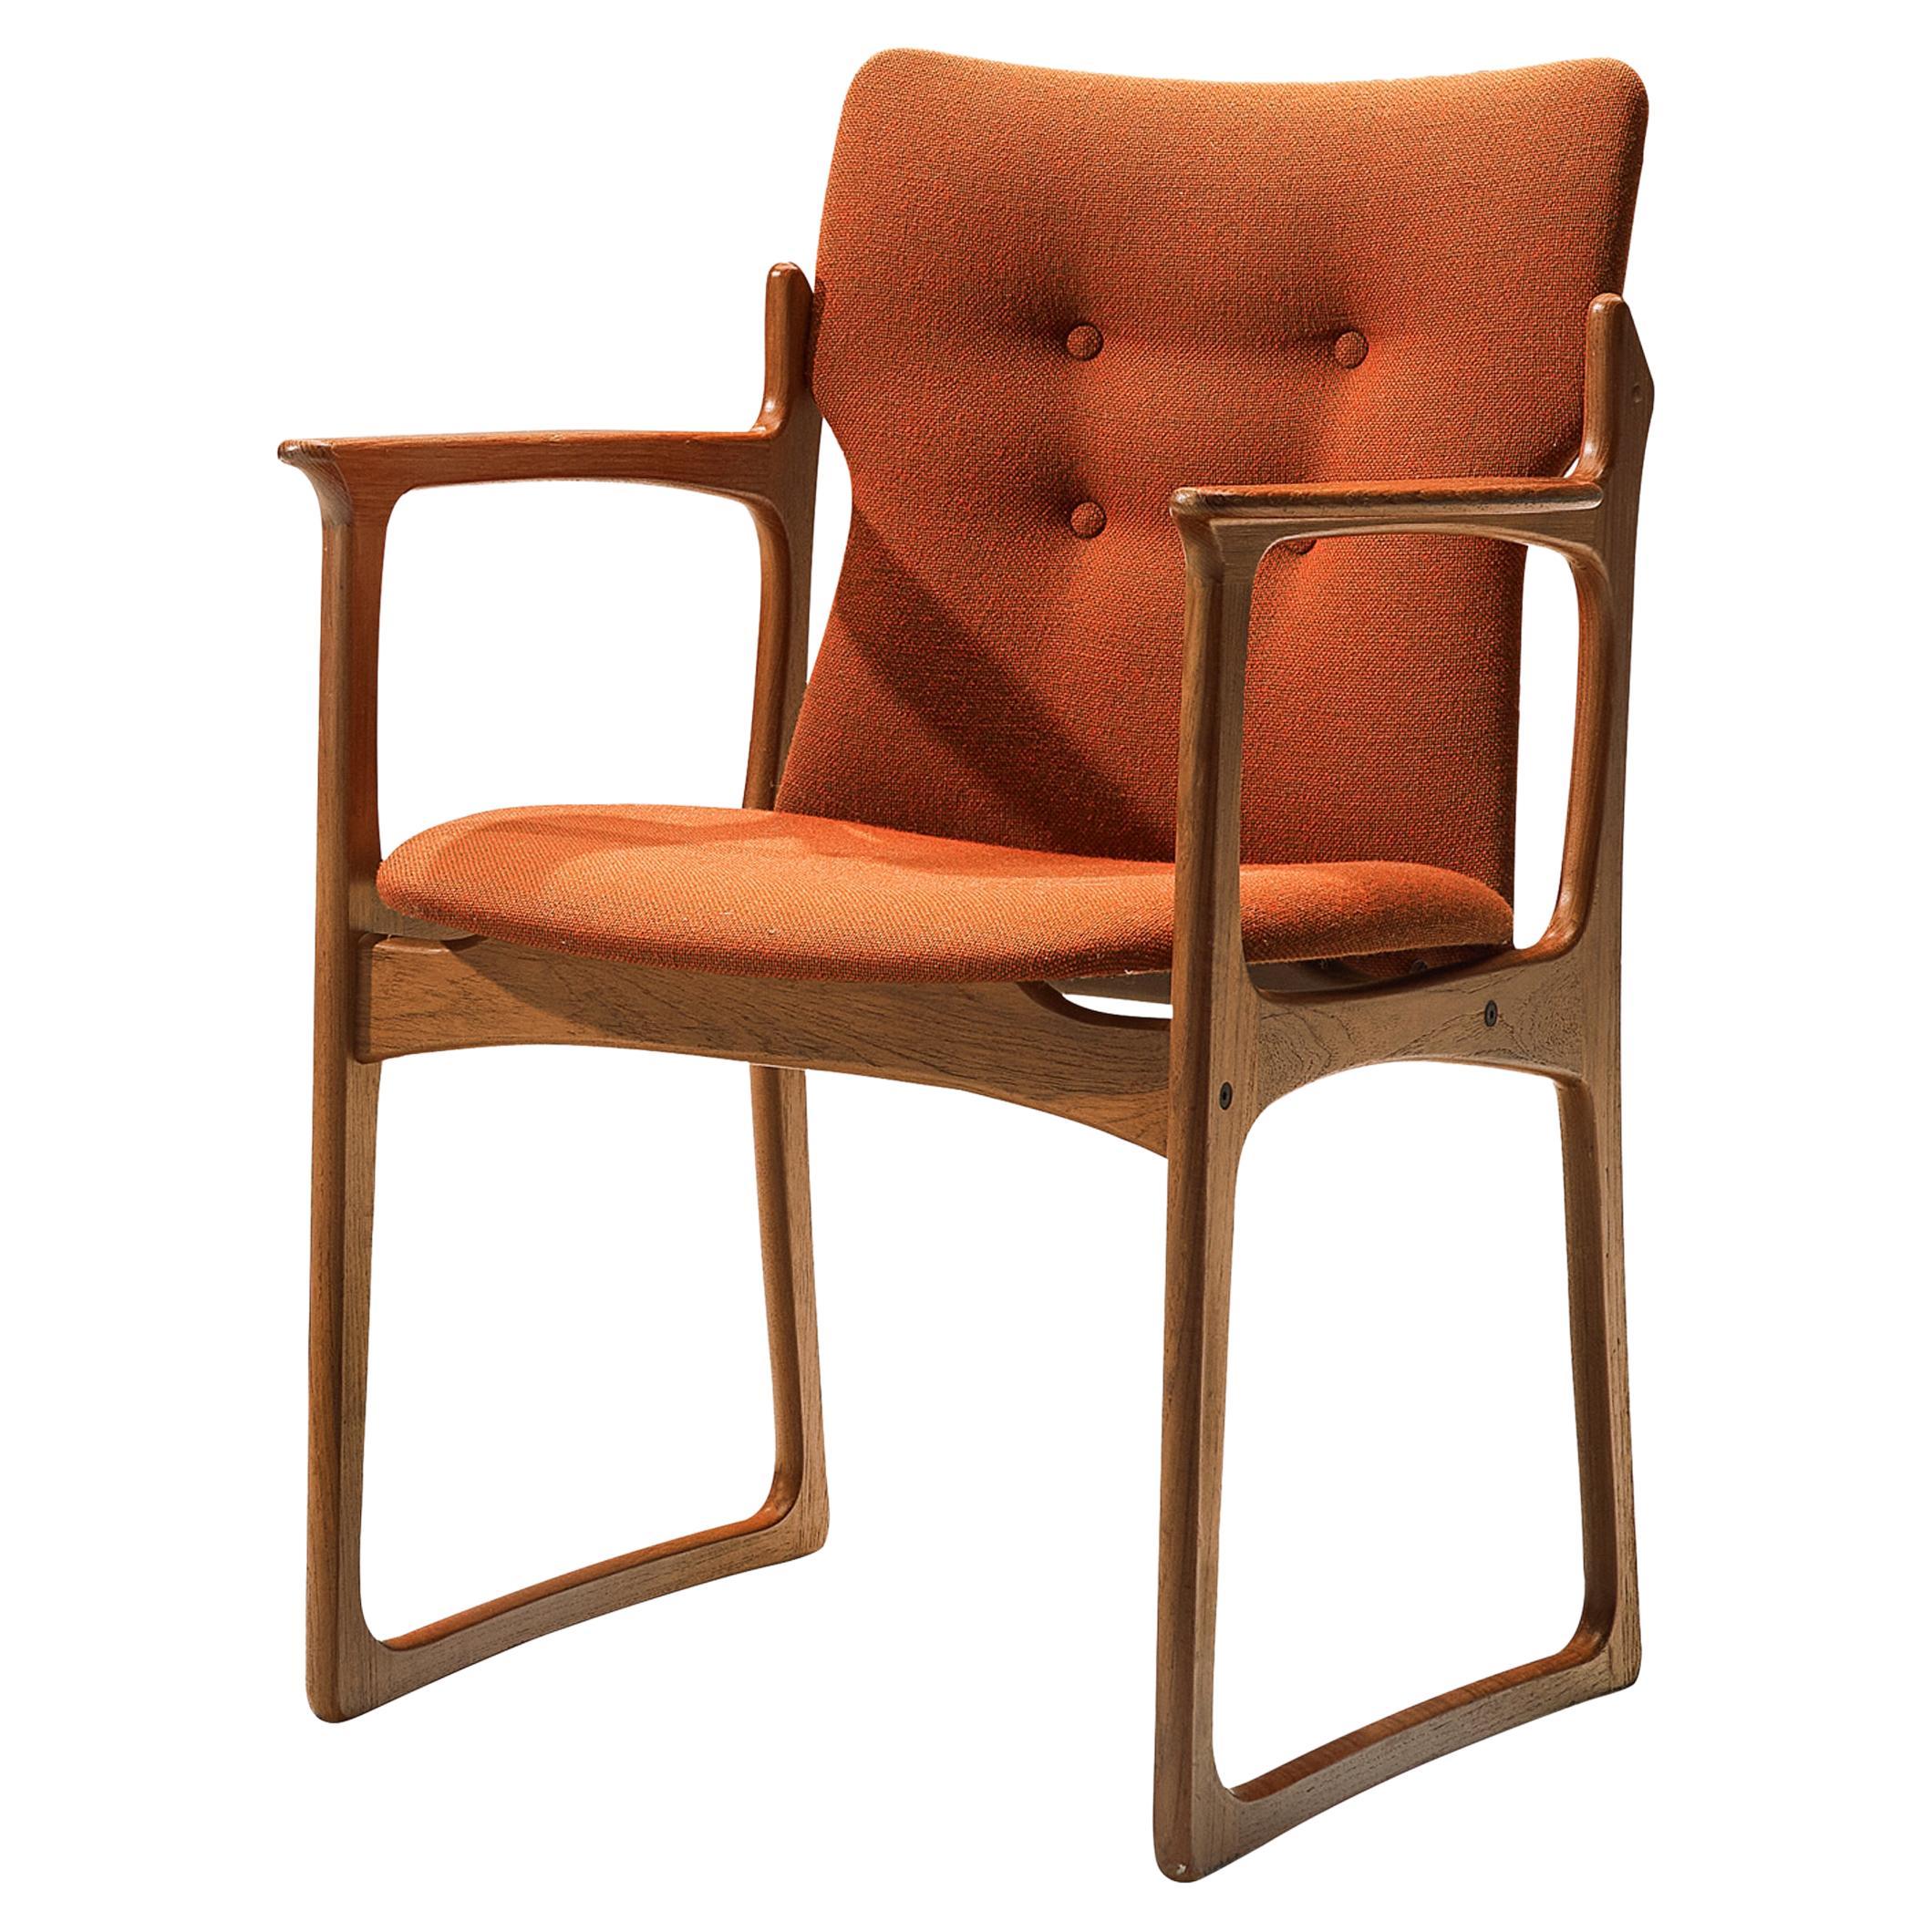 Vamdrup Stolefabrik Armchair in Teak and Orange Upholstery  For Sale